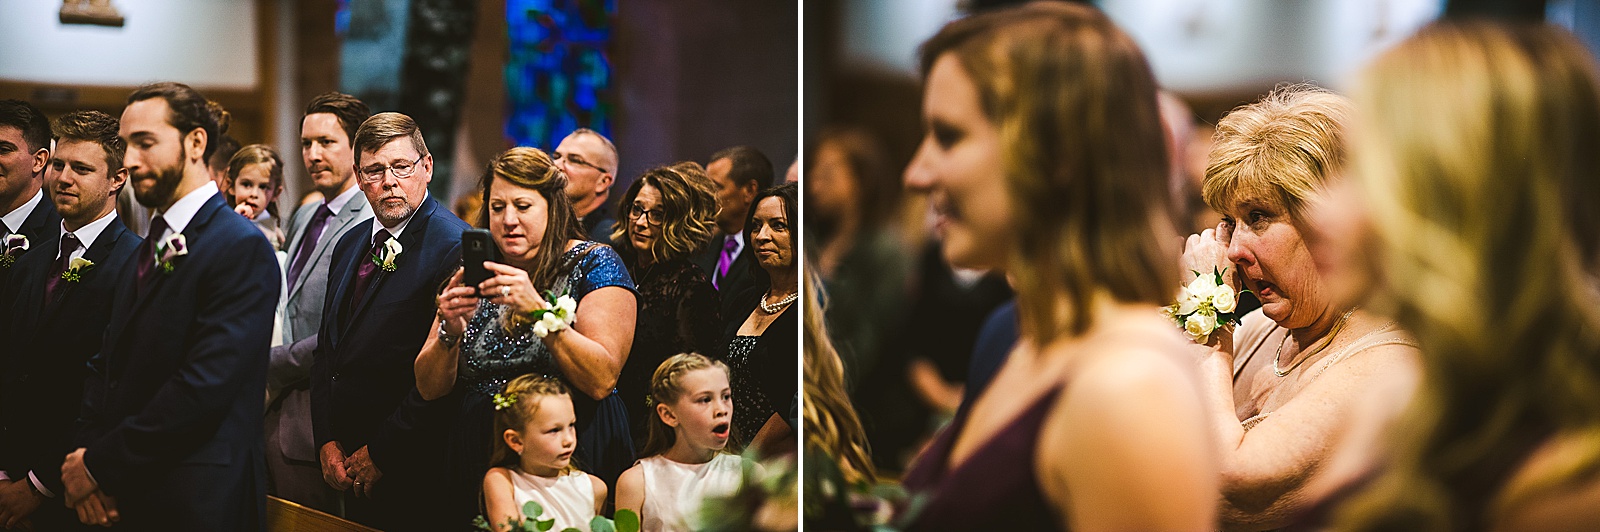 25 family reaction photos - The Glen Club Wedding Photos // Katie + Nick